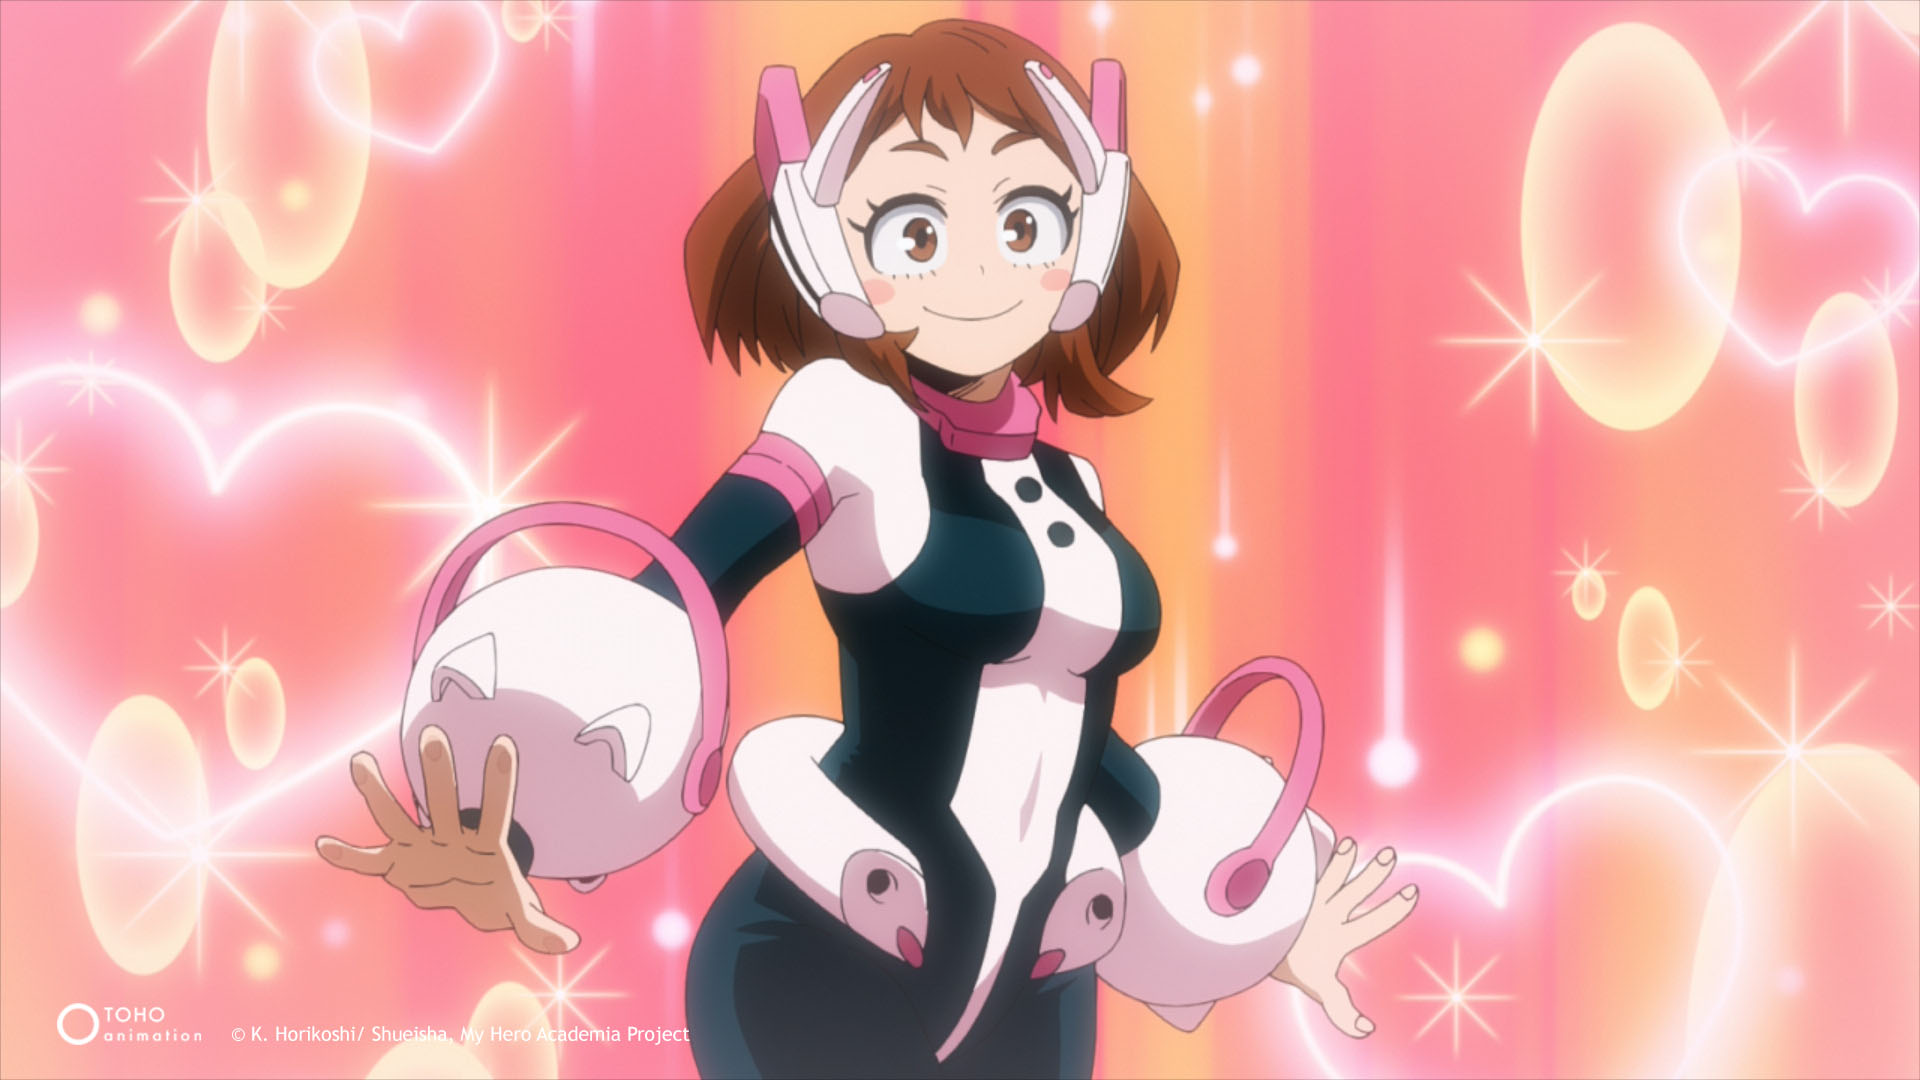 Animator Mamoru Hosada says Japanese anime has problem with women and girls